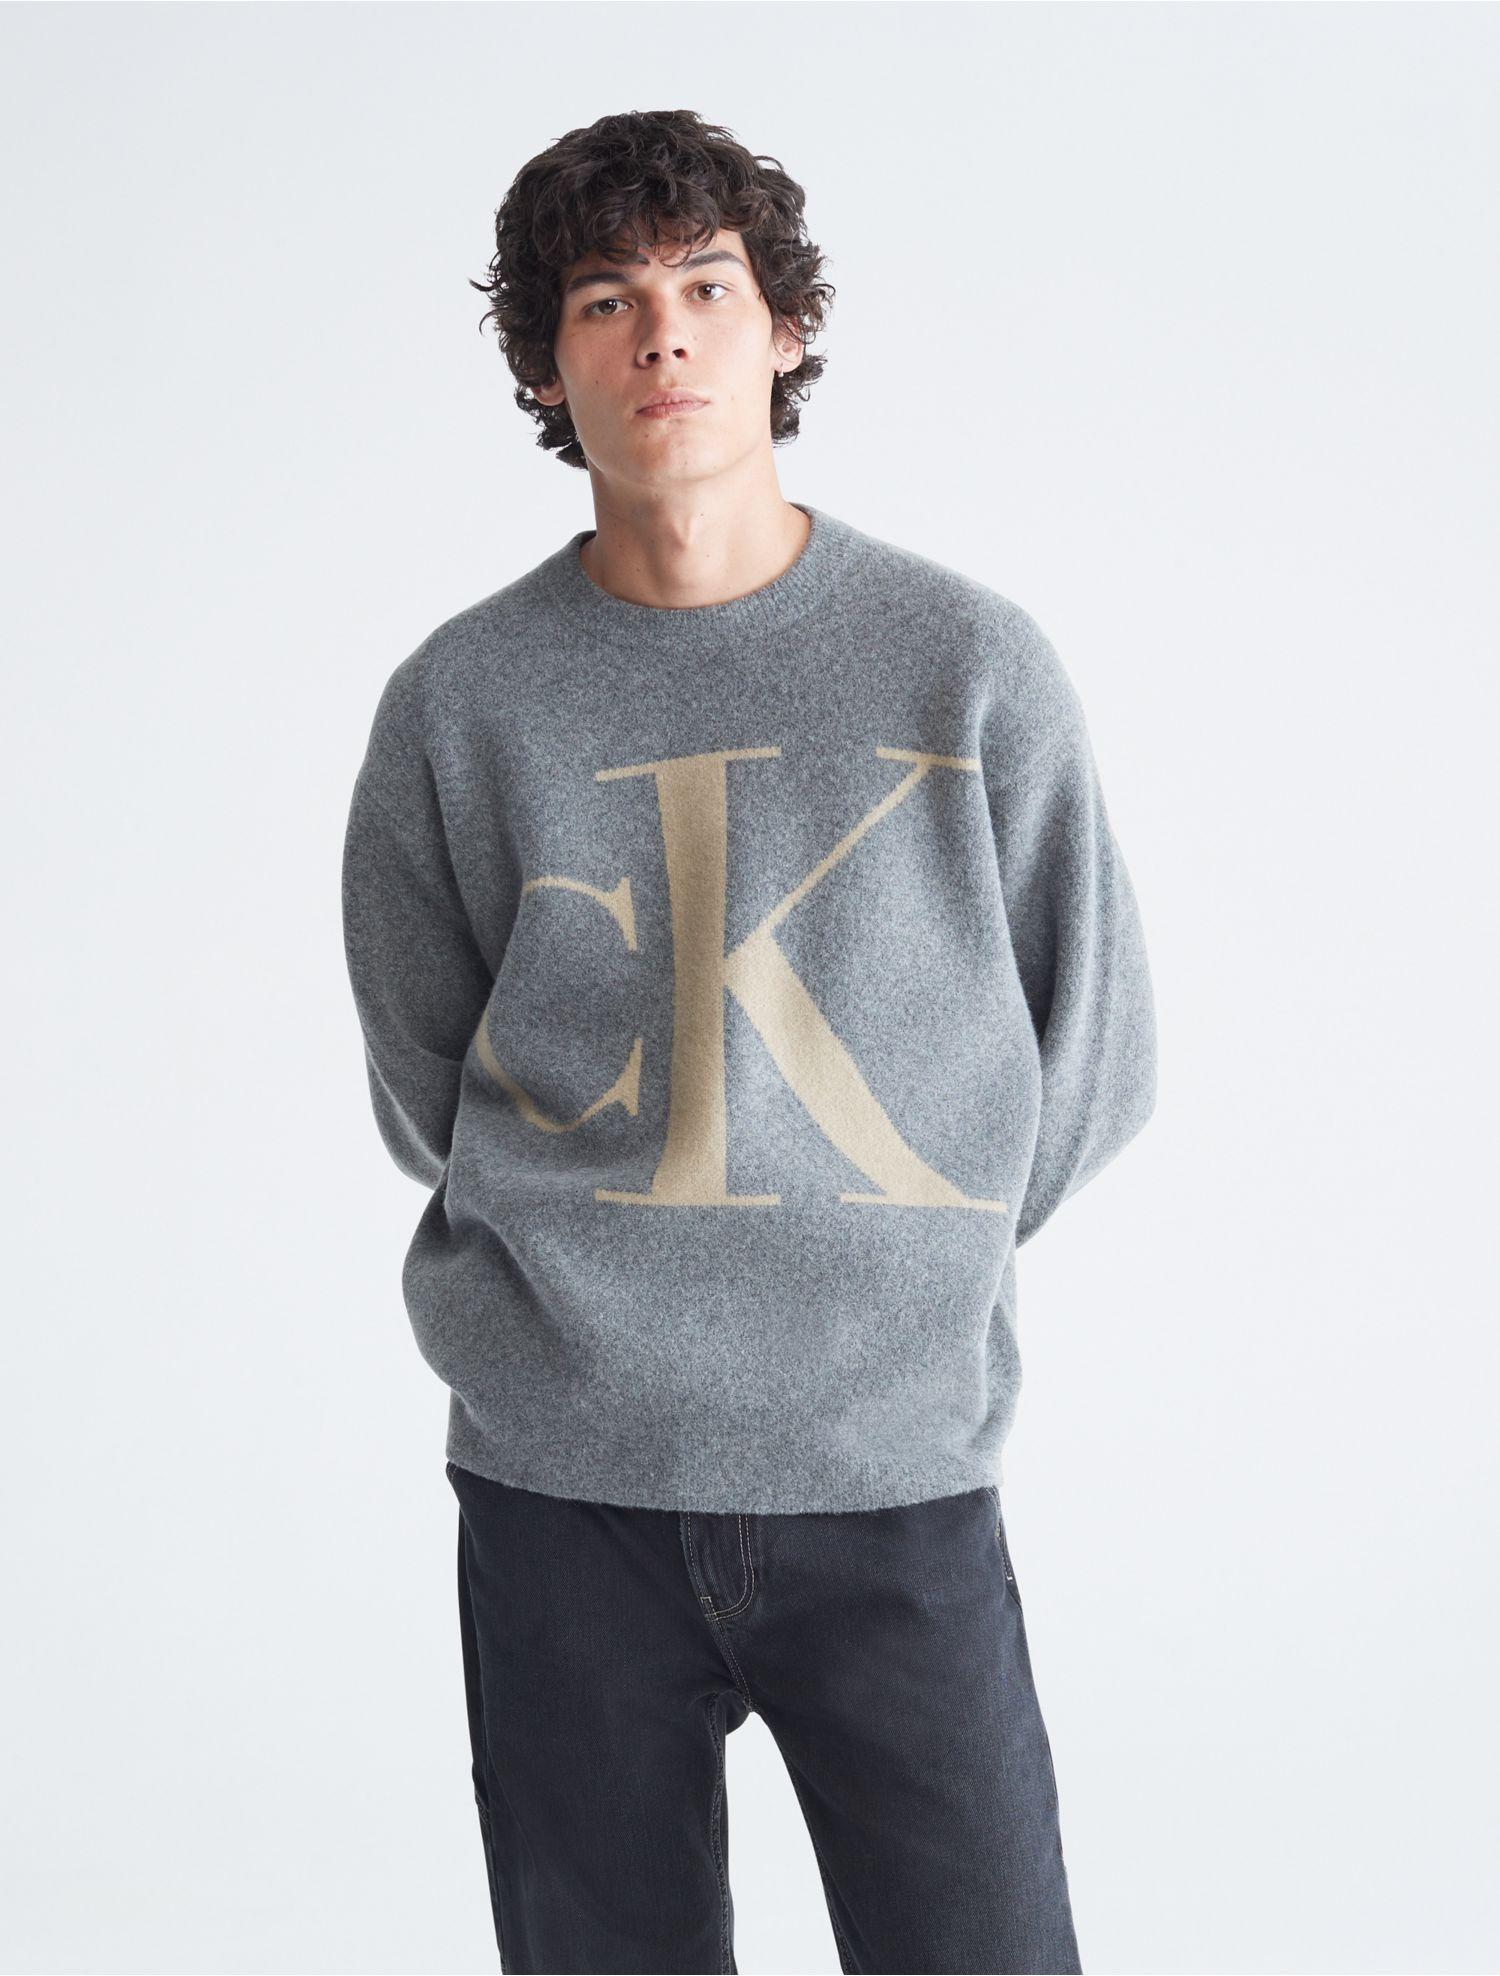 Calvin Klein for Logo Lyst Sweater in Blue Monogram Men Jacquard Crewneck 